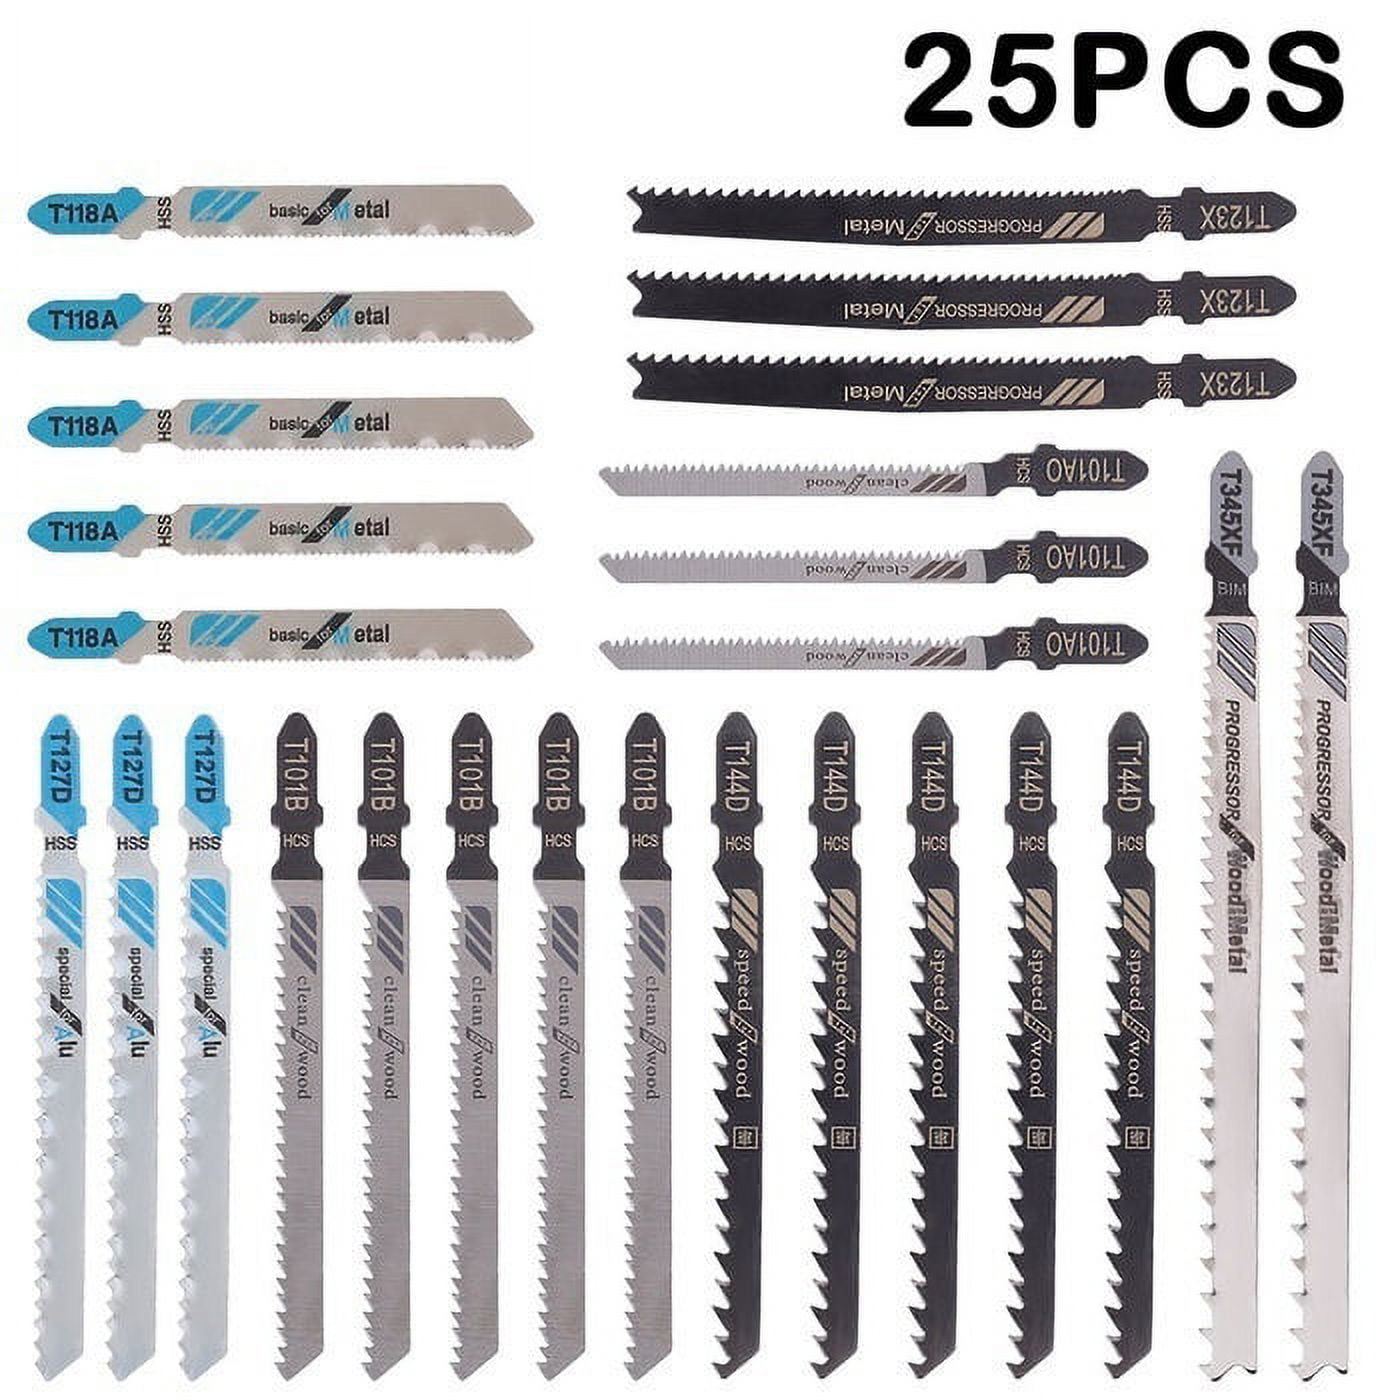 20pcs Jigsaw Blades Set T Shaft Hcs Assorted Jig Saw Blades For Wood  Plastic And Metal